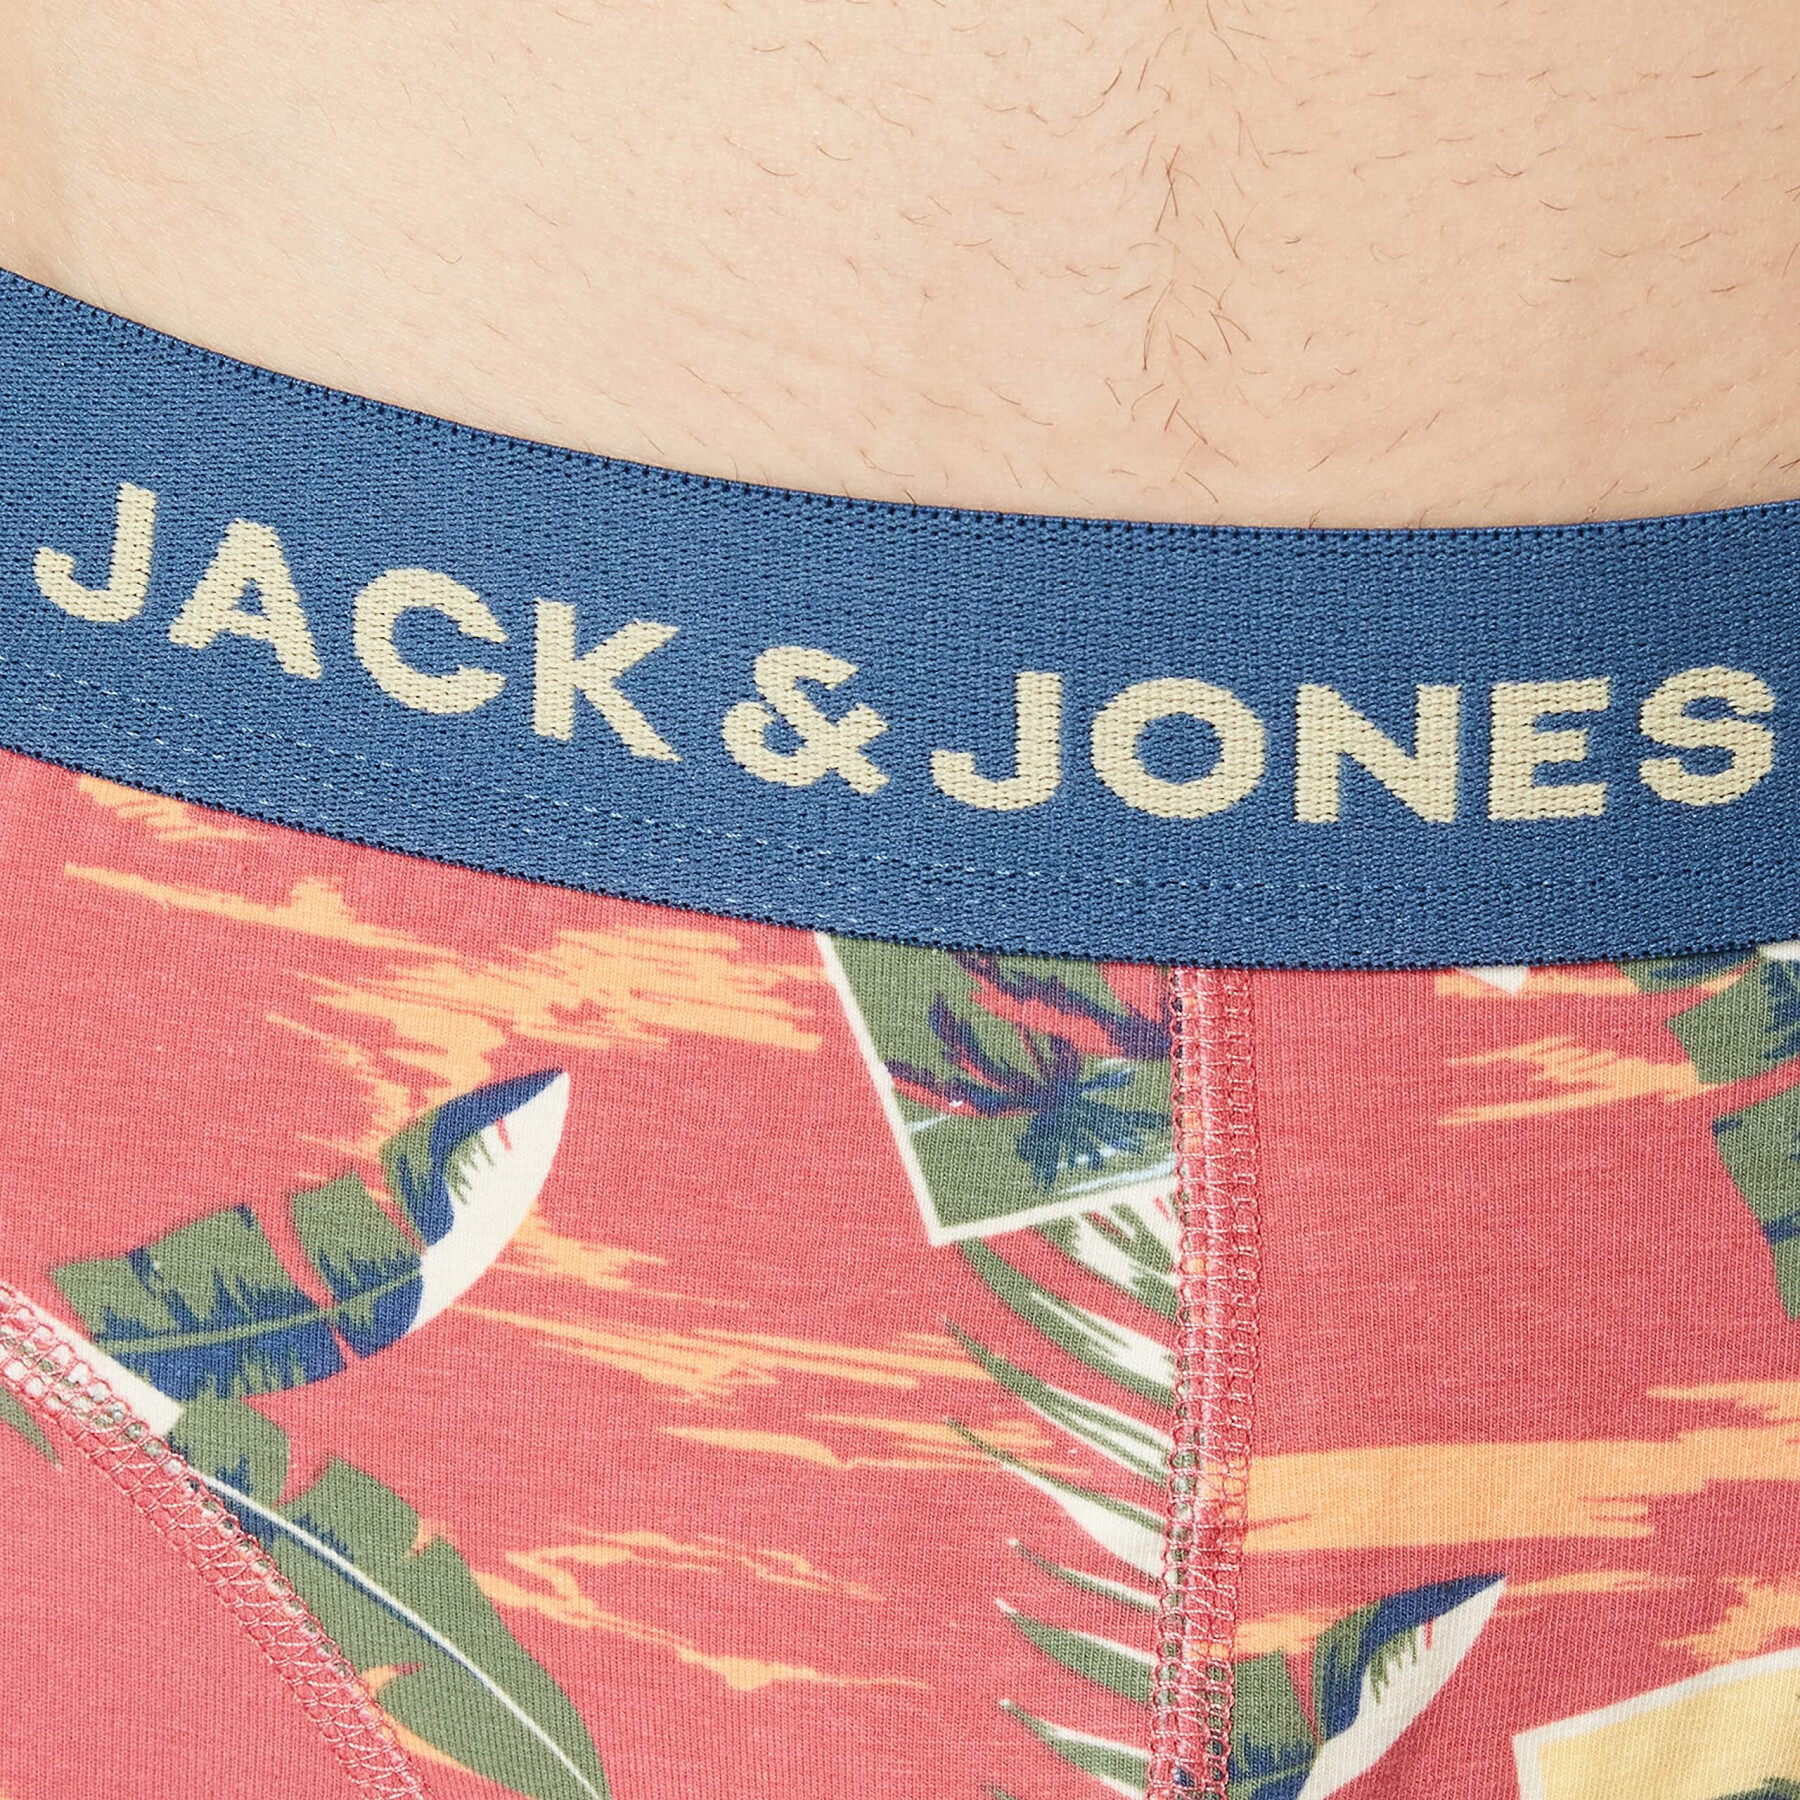 Boxer Jack & Jones Jactropic